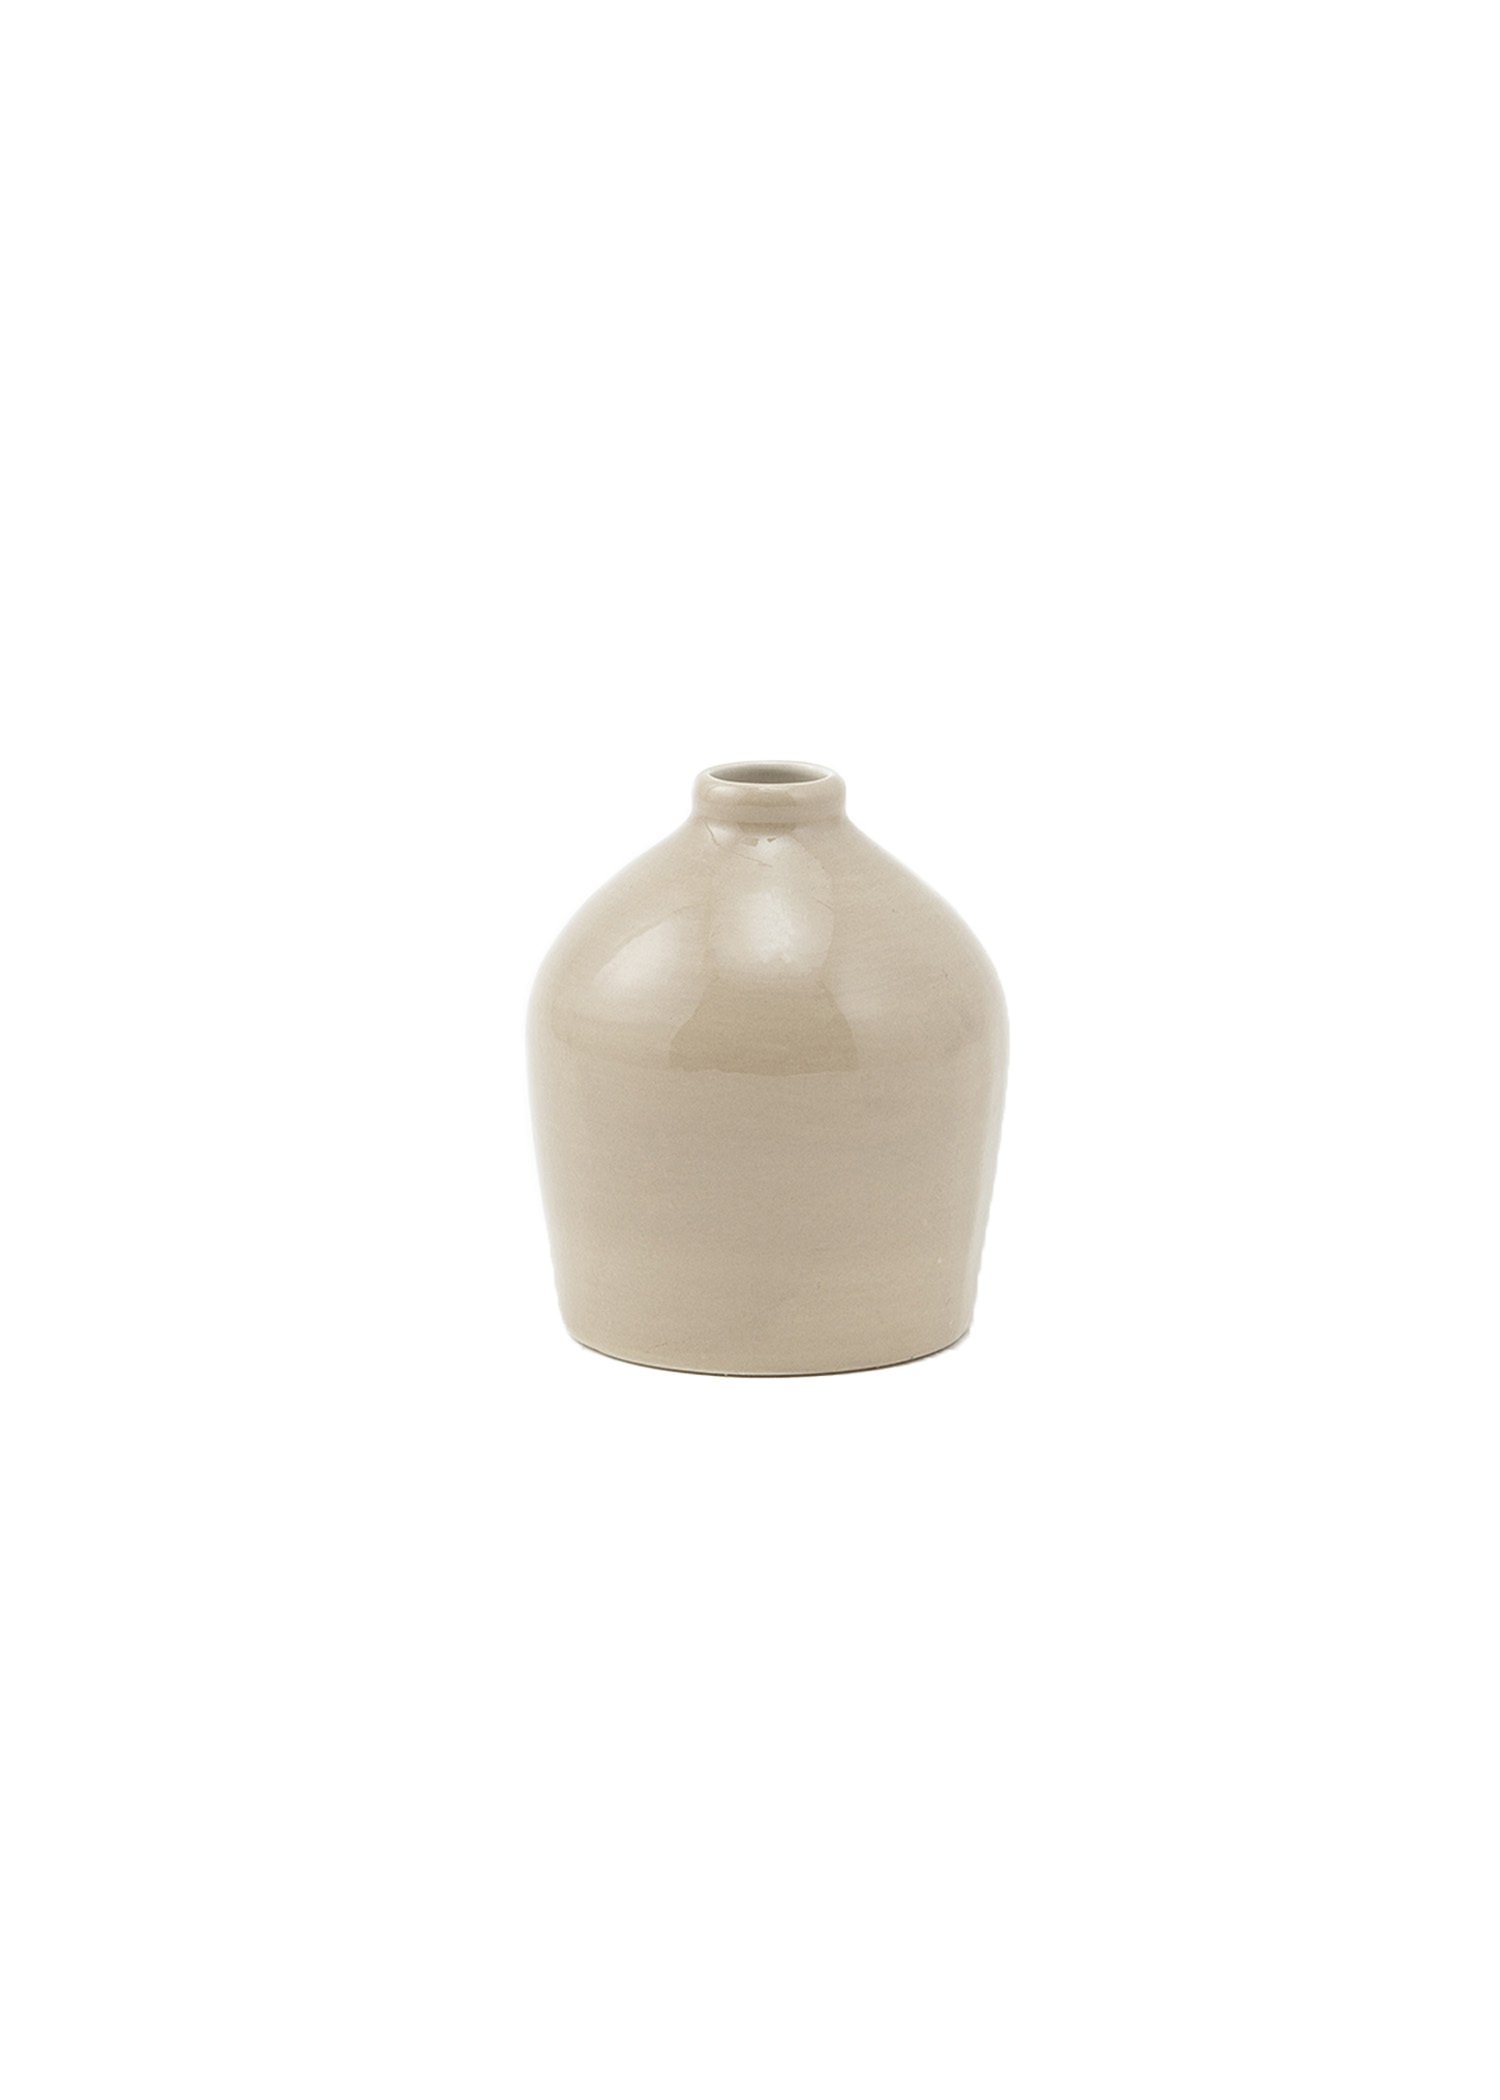 Small beige stoneware vase